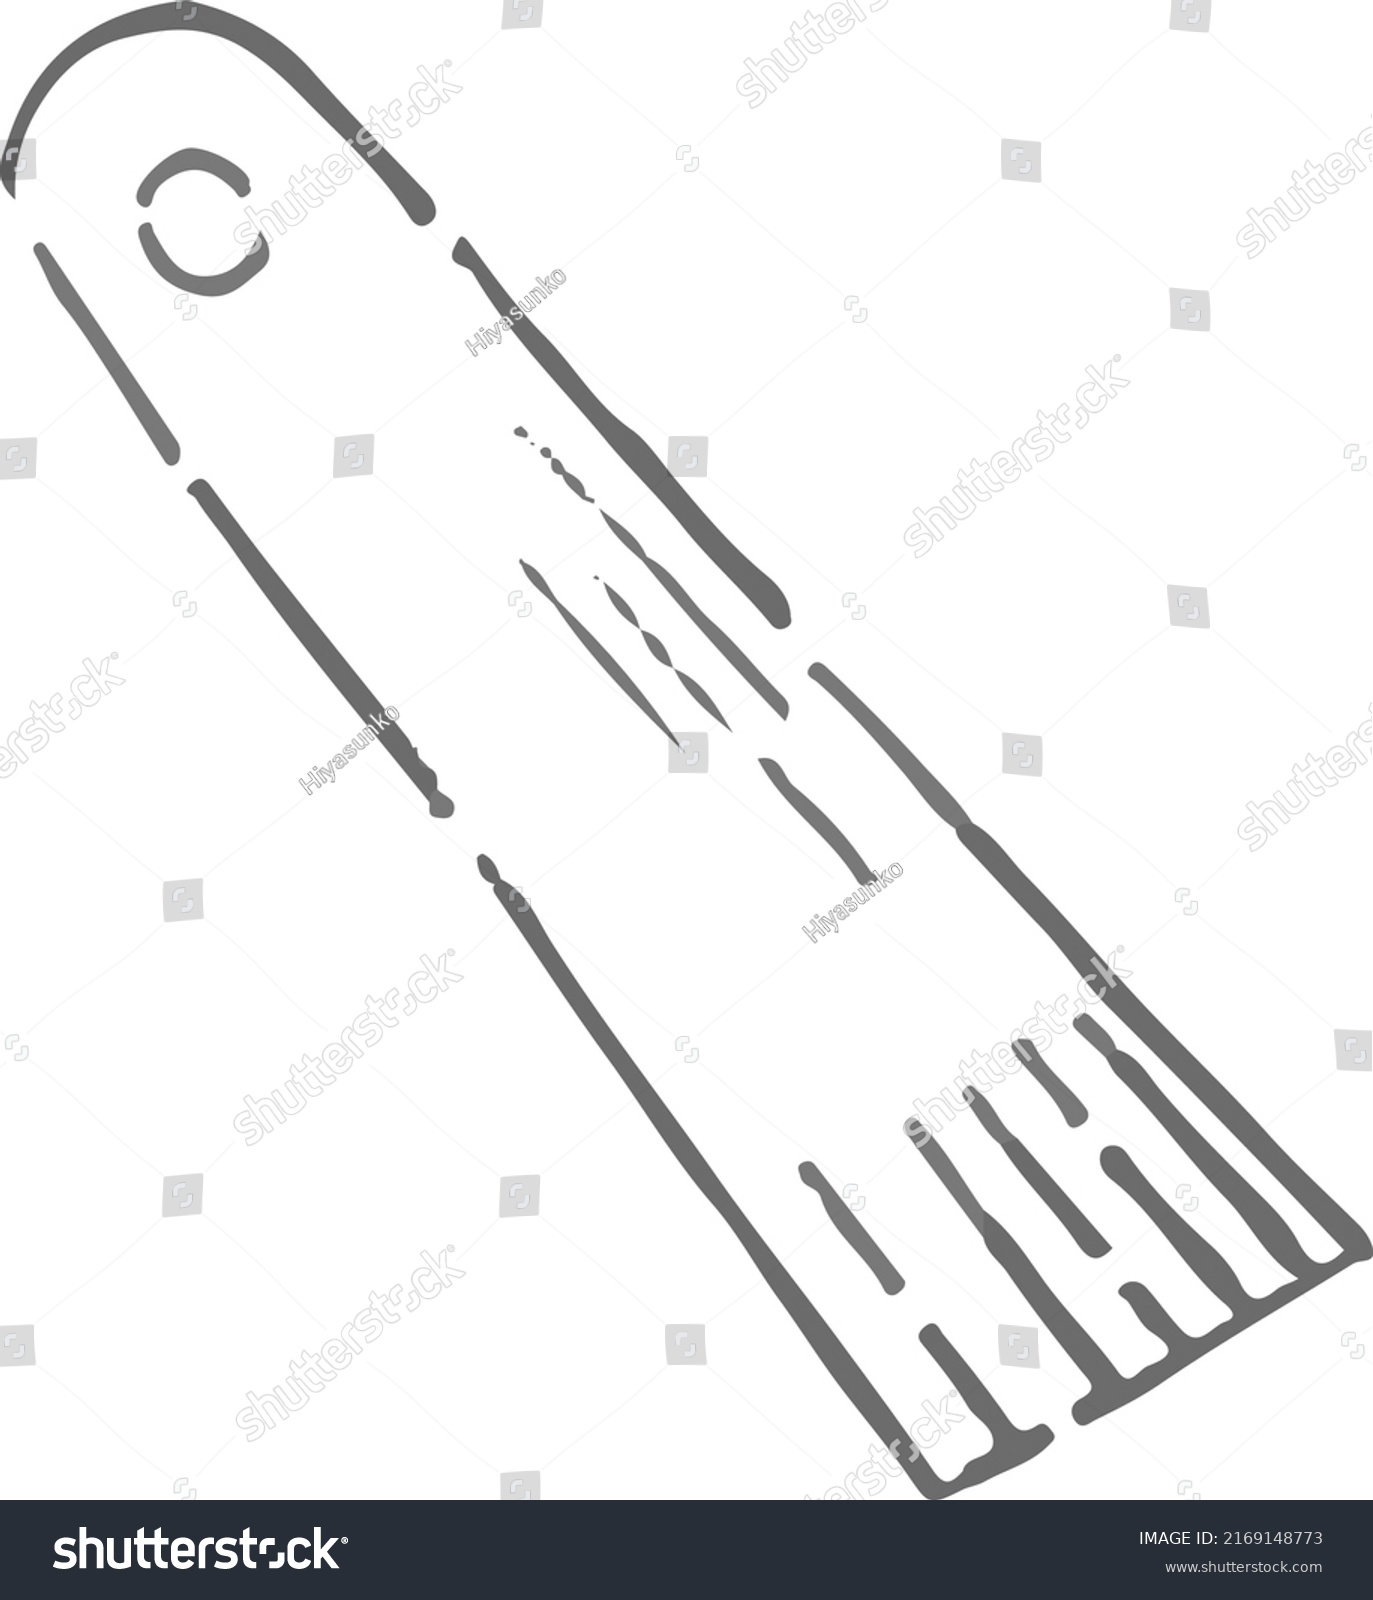 Stock Vector Spatula Line Drawing Vector Illustration 2169148773 